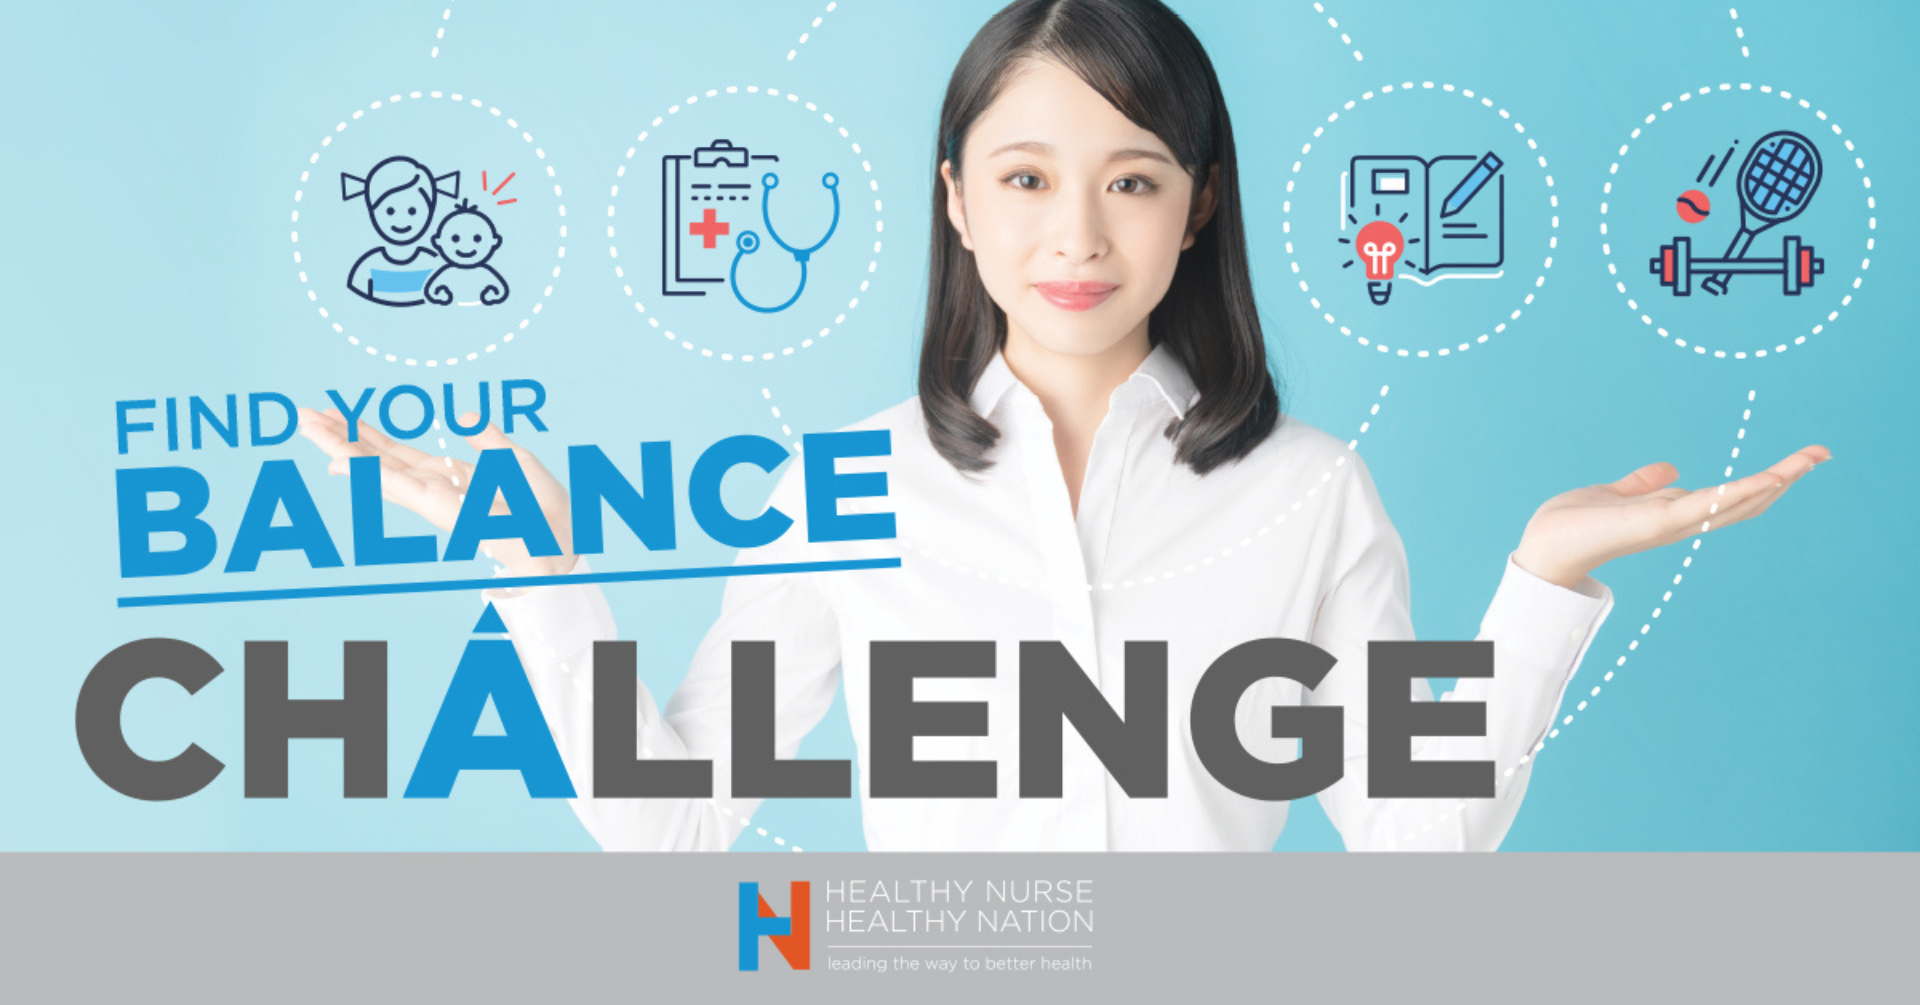 Start Small, Joyful Rituals - Healthy Nurse, Healthy Nation - Find Your Balance challenge - Day 4 4643